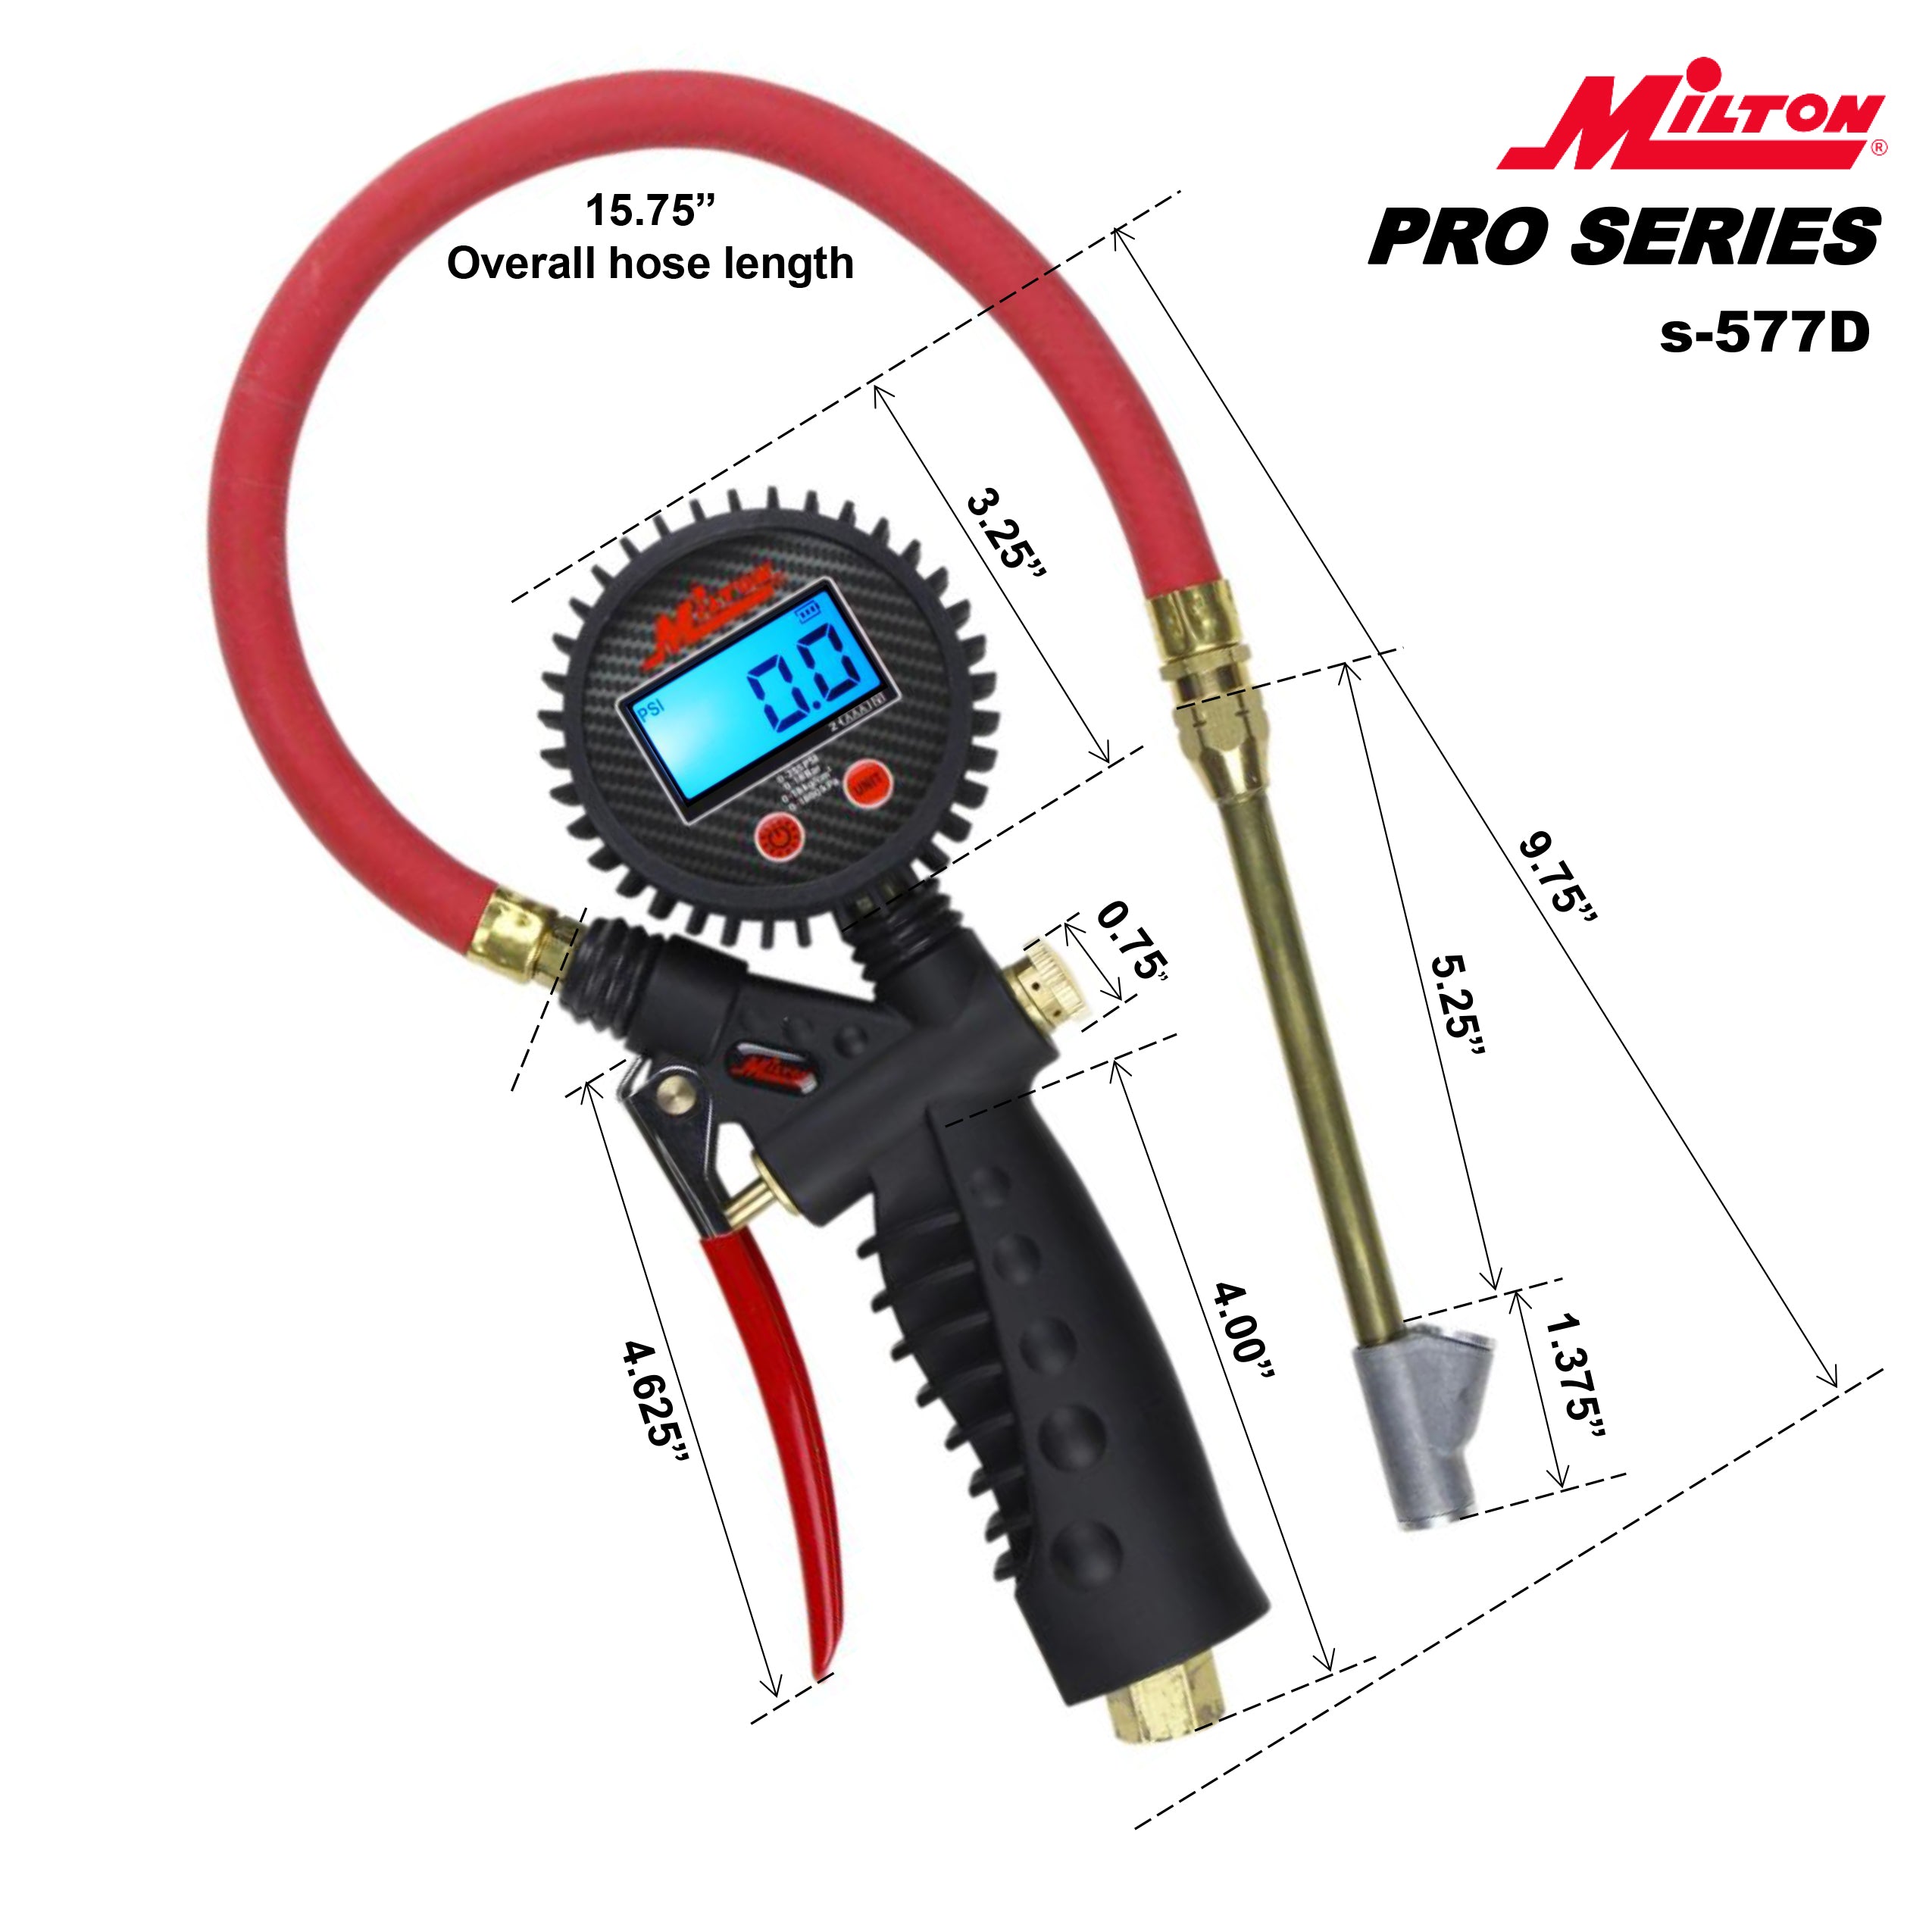 Pro Digital Tire Inflator/Pressure Pistol Grip Gauge, Straight Foot Chuck w/Lock-On Threads, 15